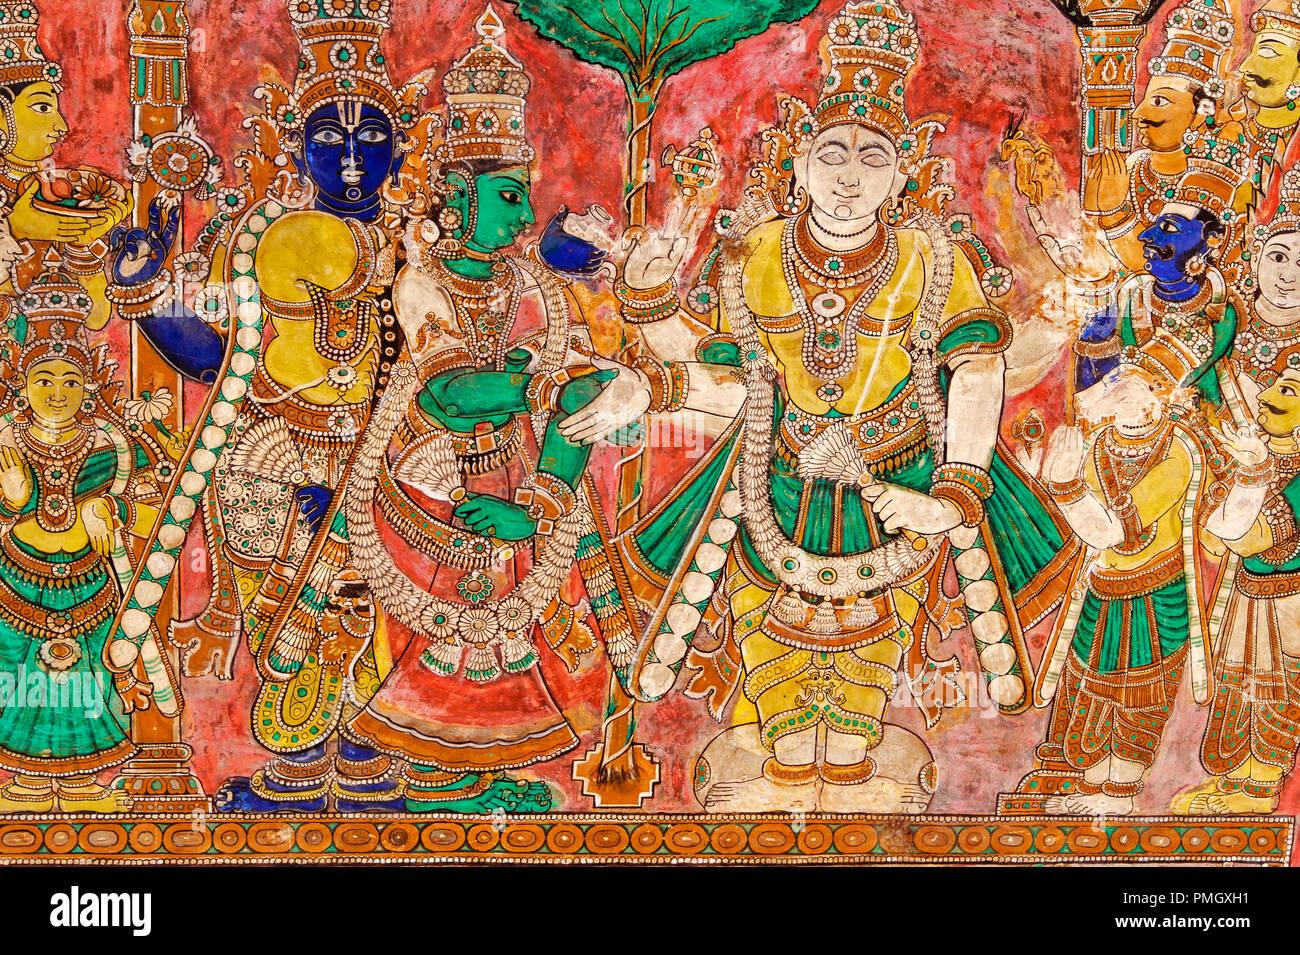 Meenakshi temple madurai painting hi res stock photography and